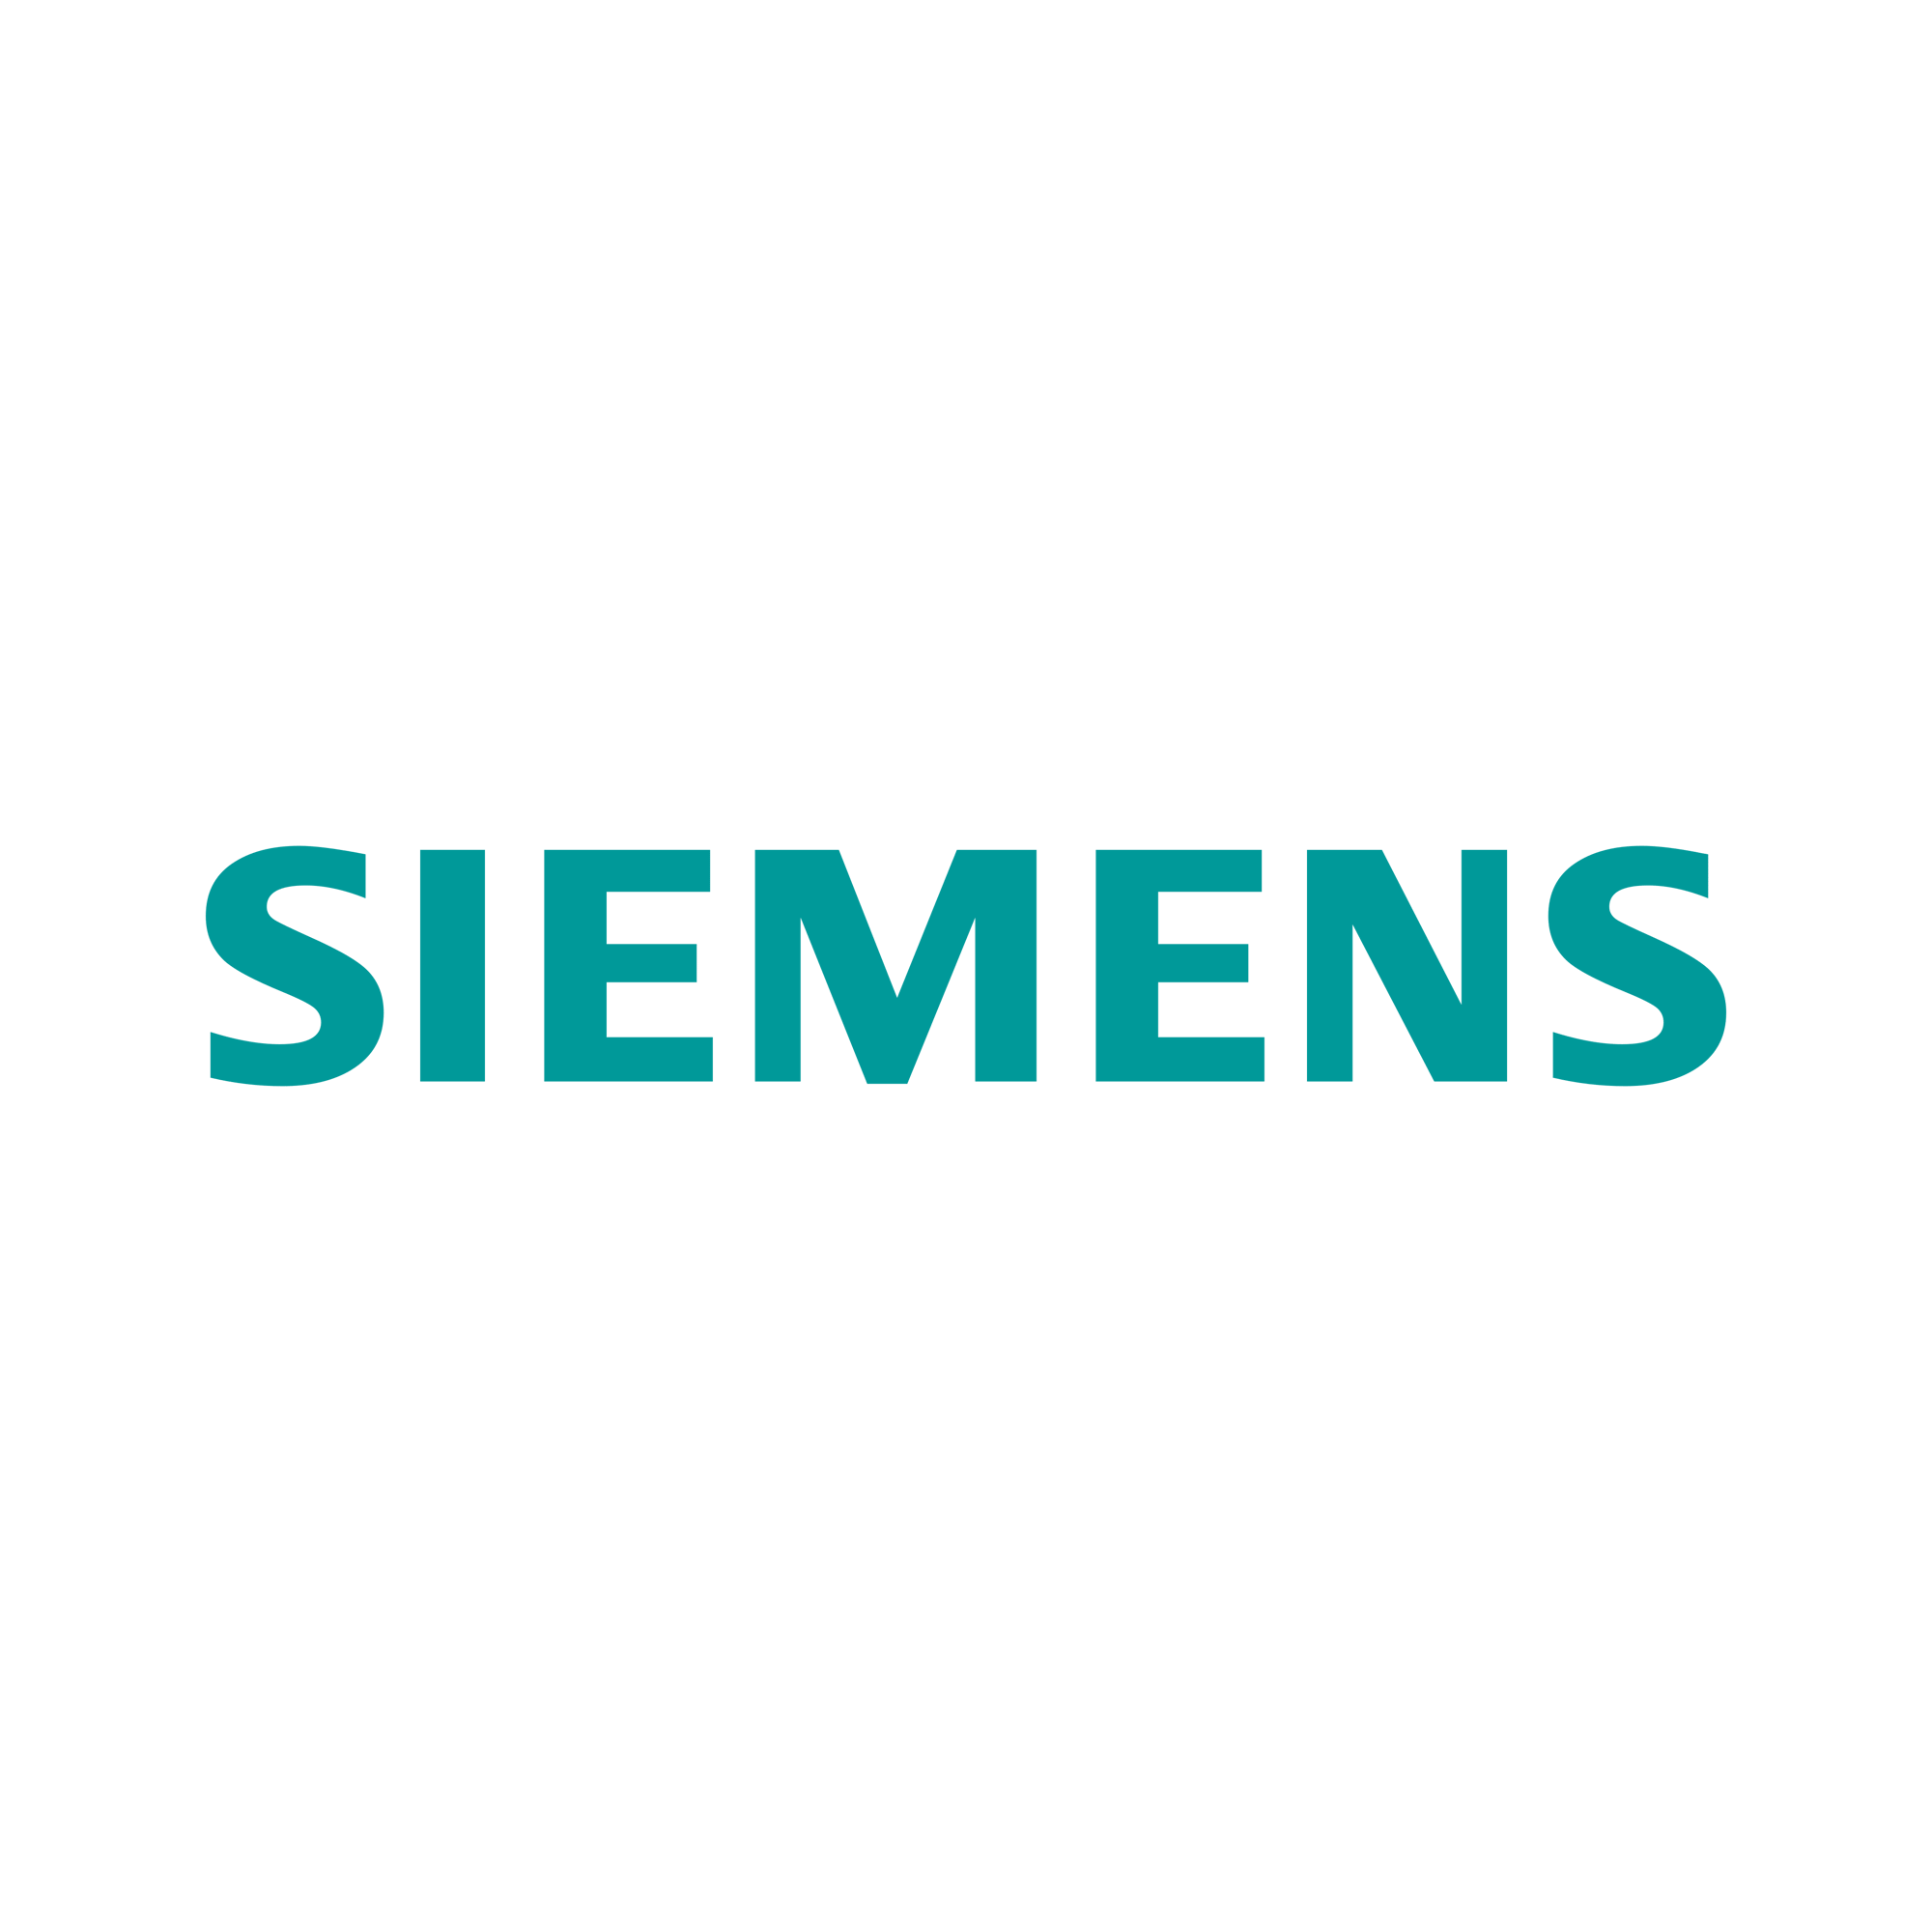 siemens-logo-0